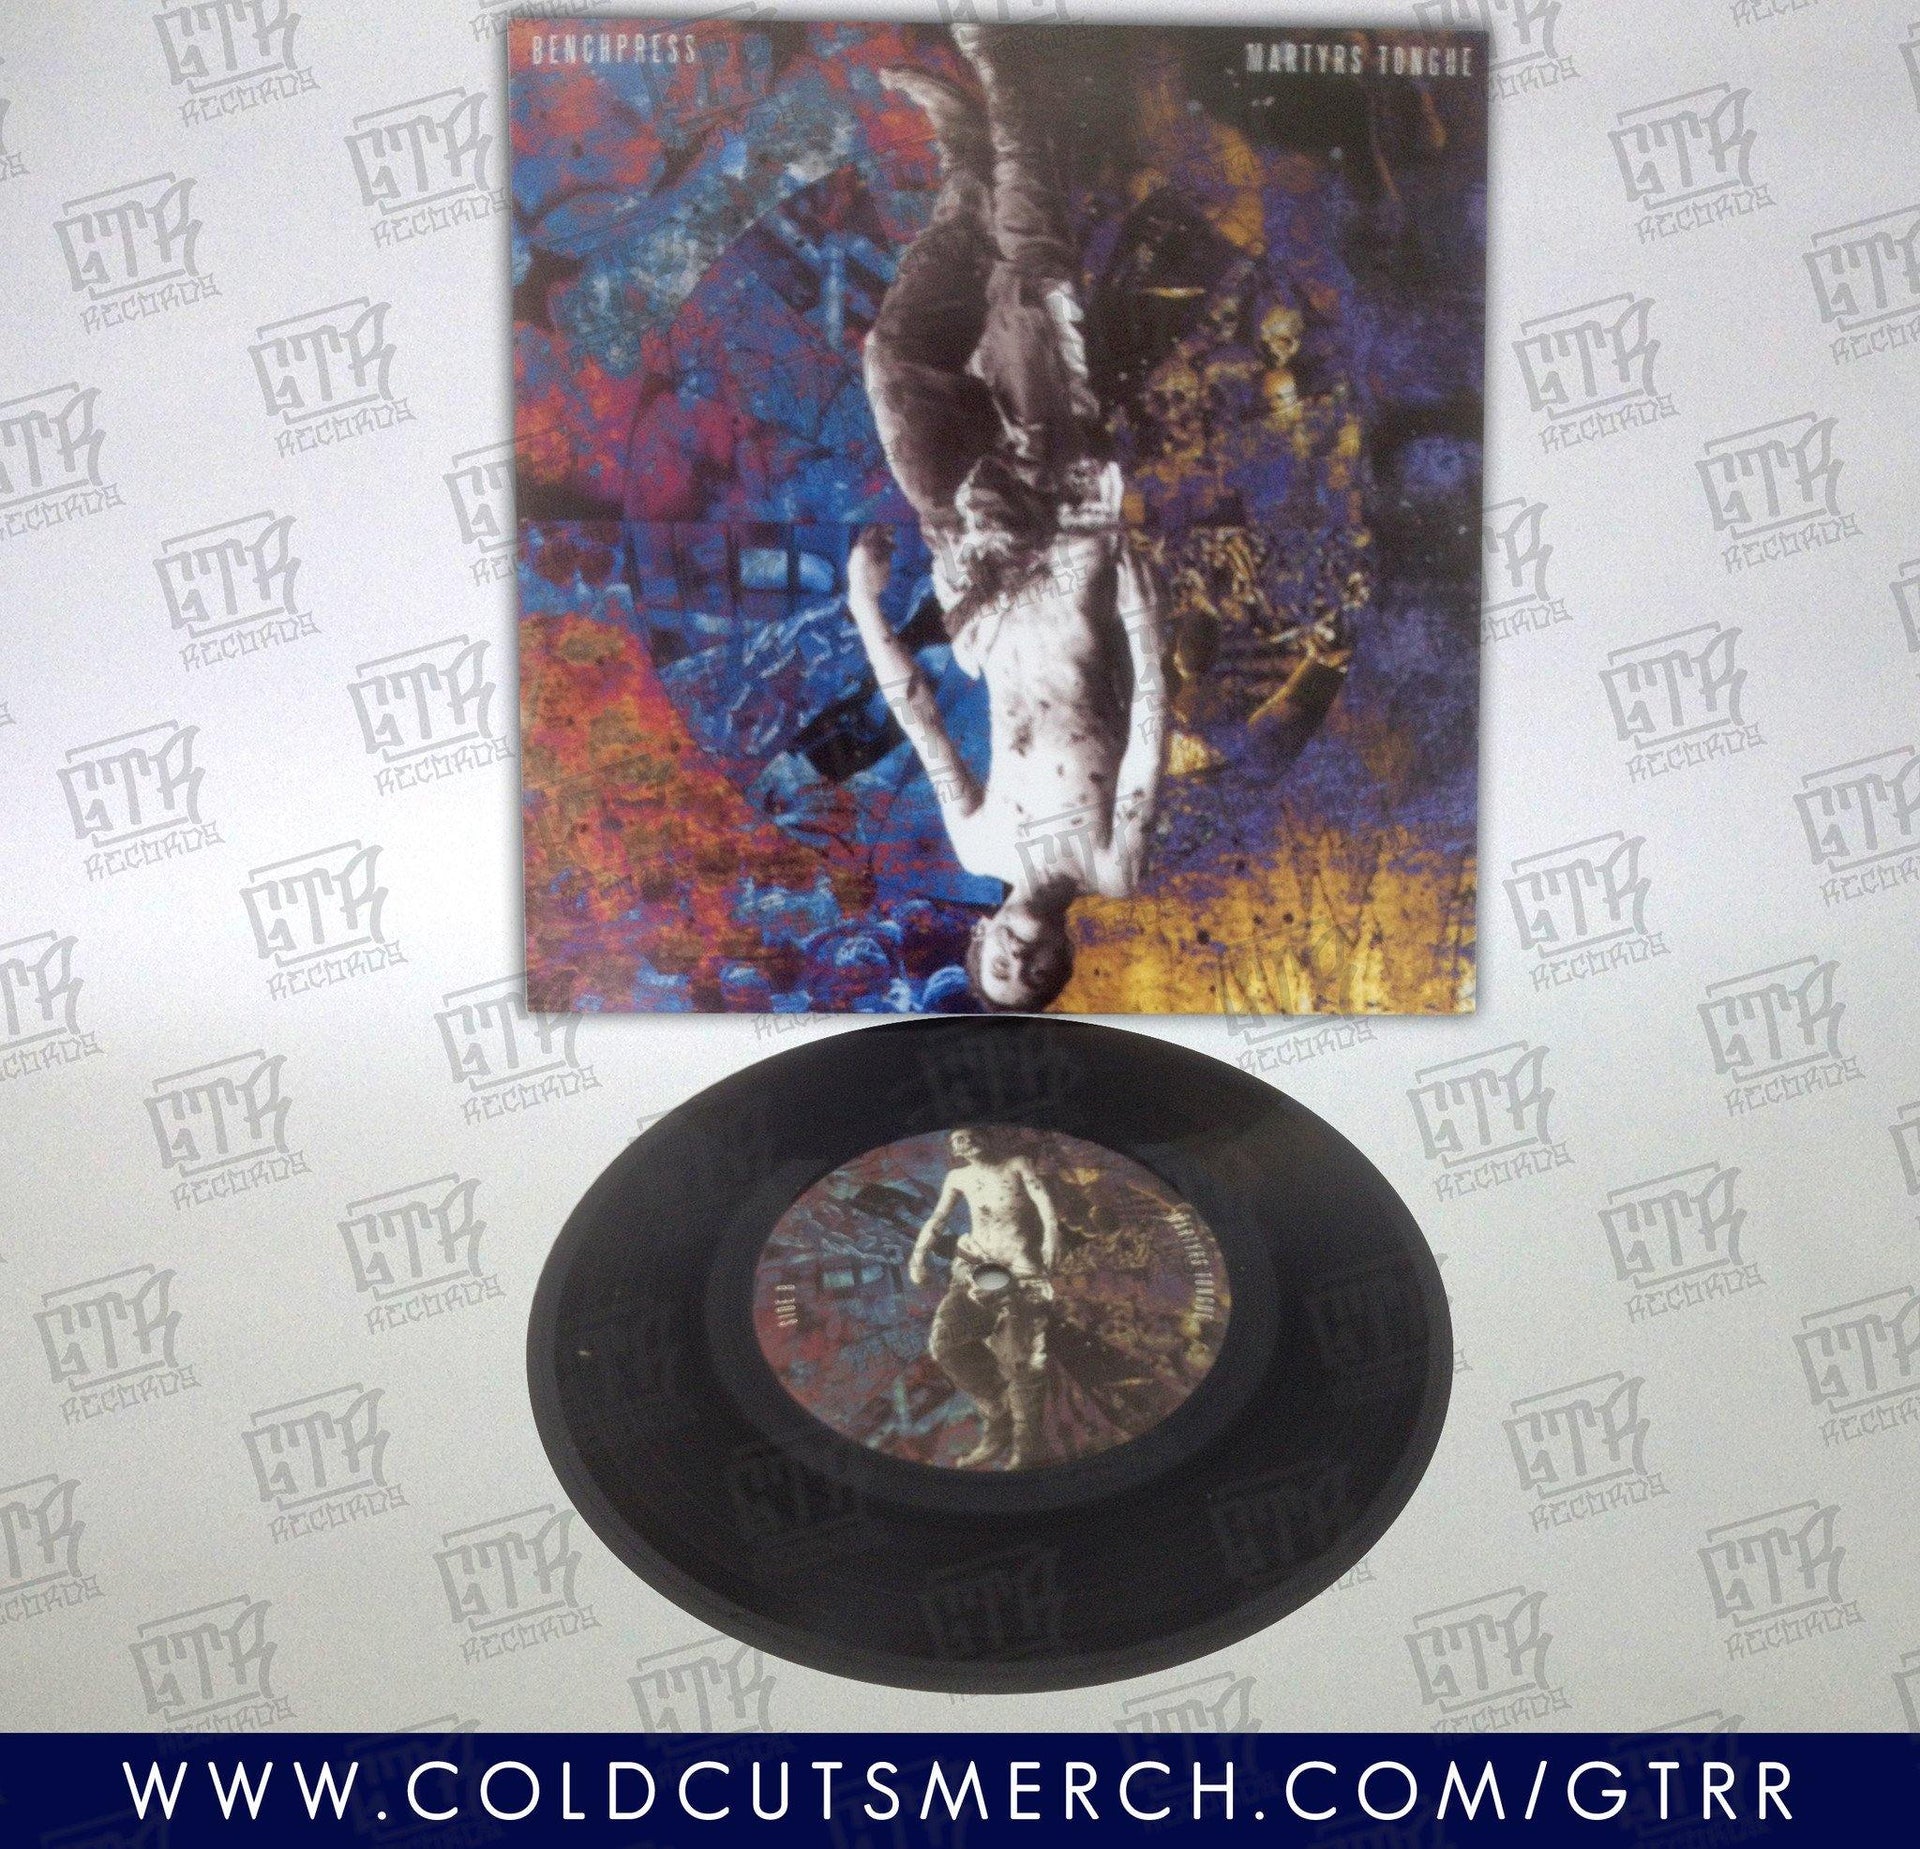 Buy – Benchpress/Martyr's Tongue Split 7" – Band & Music Merch – Cold Cuts Merch